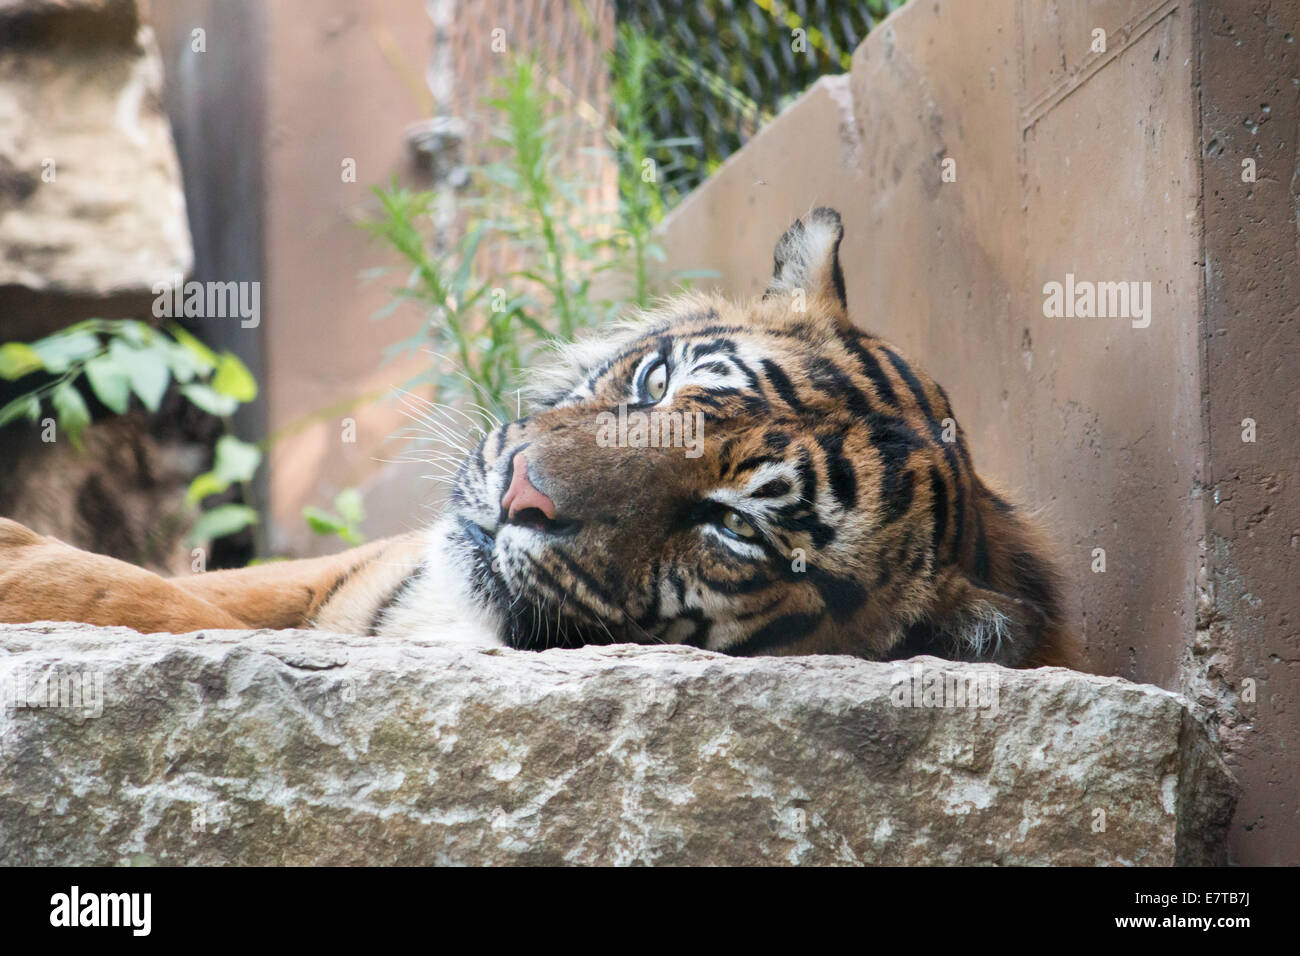 Tiger laying down enjoying the day Stock Photo